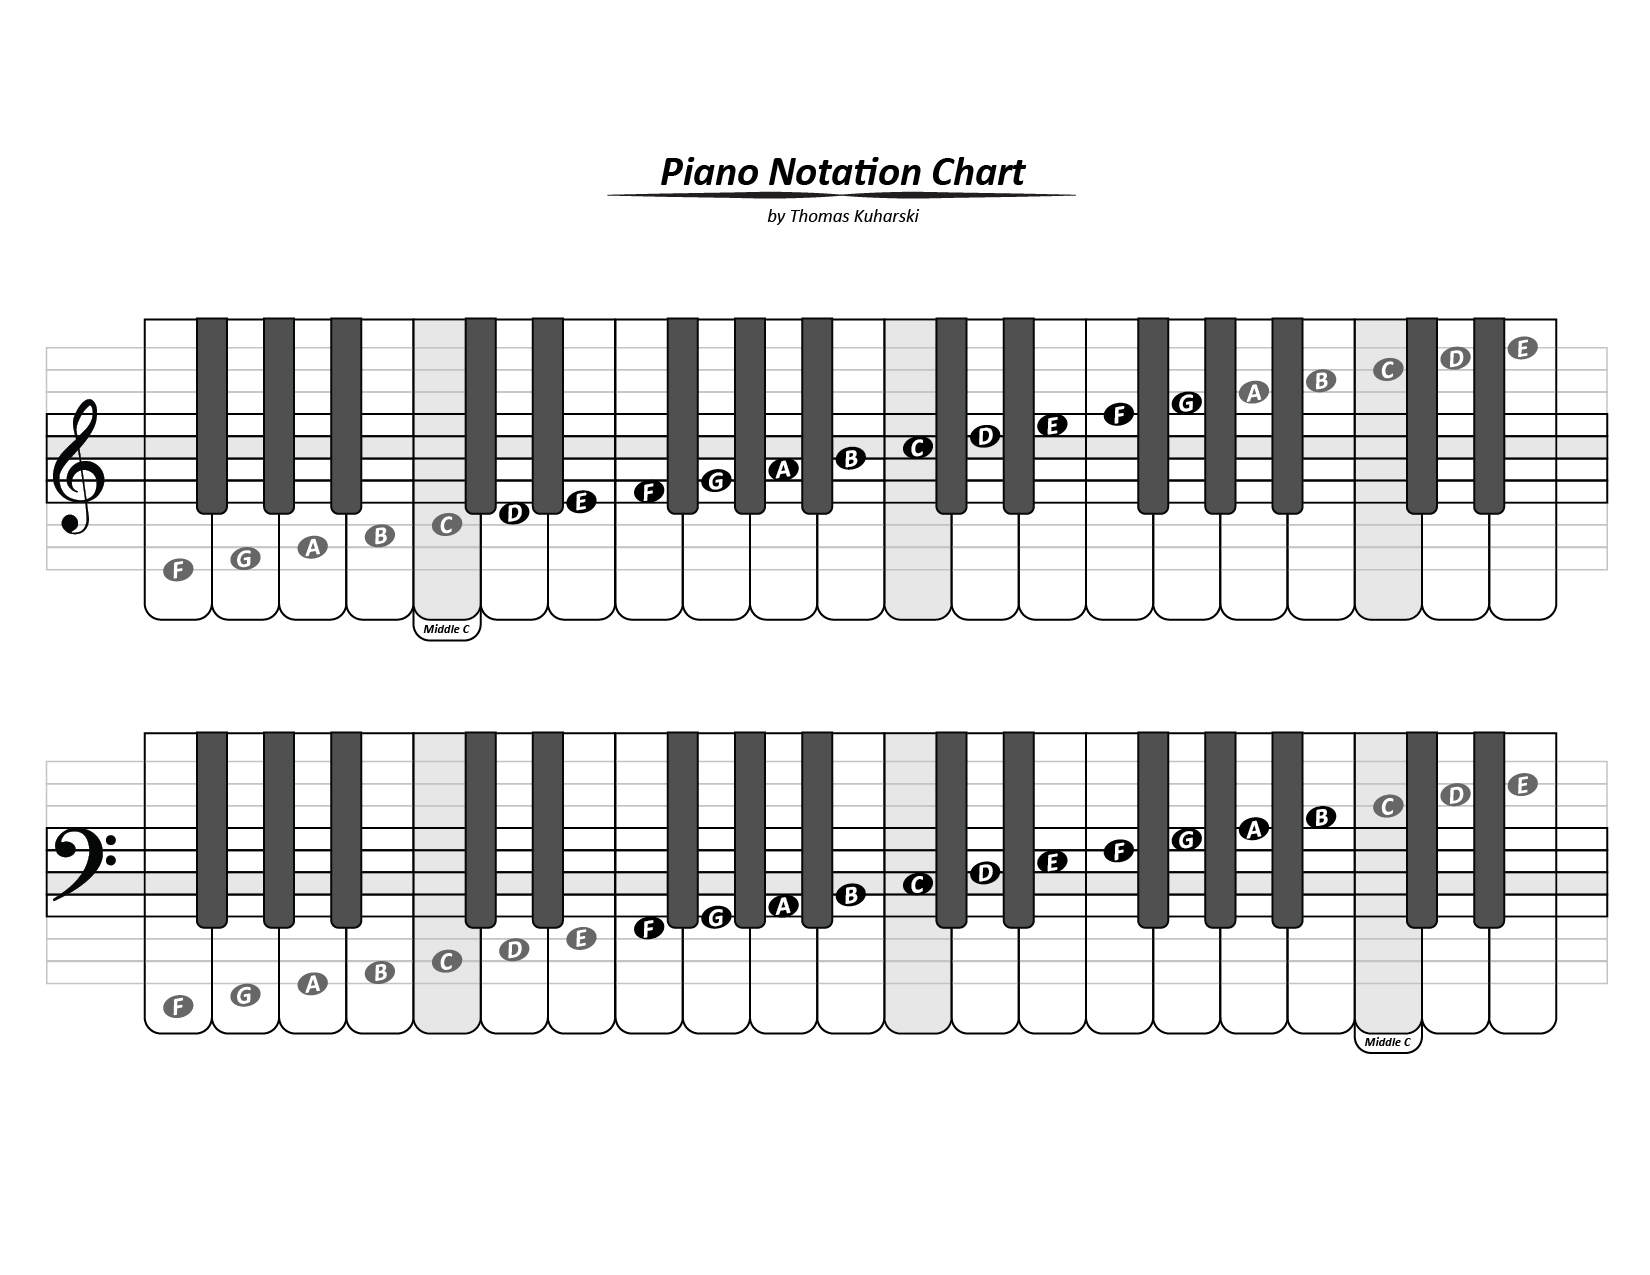 chart of piano notation